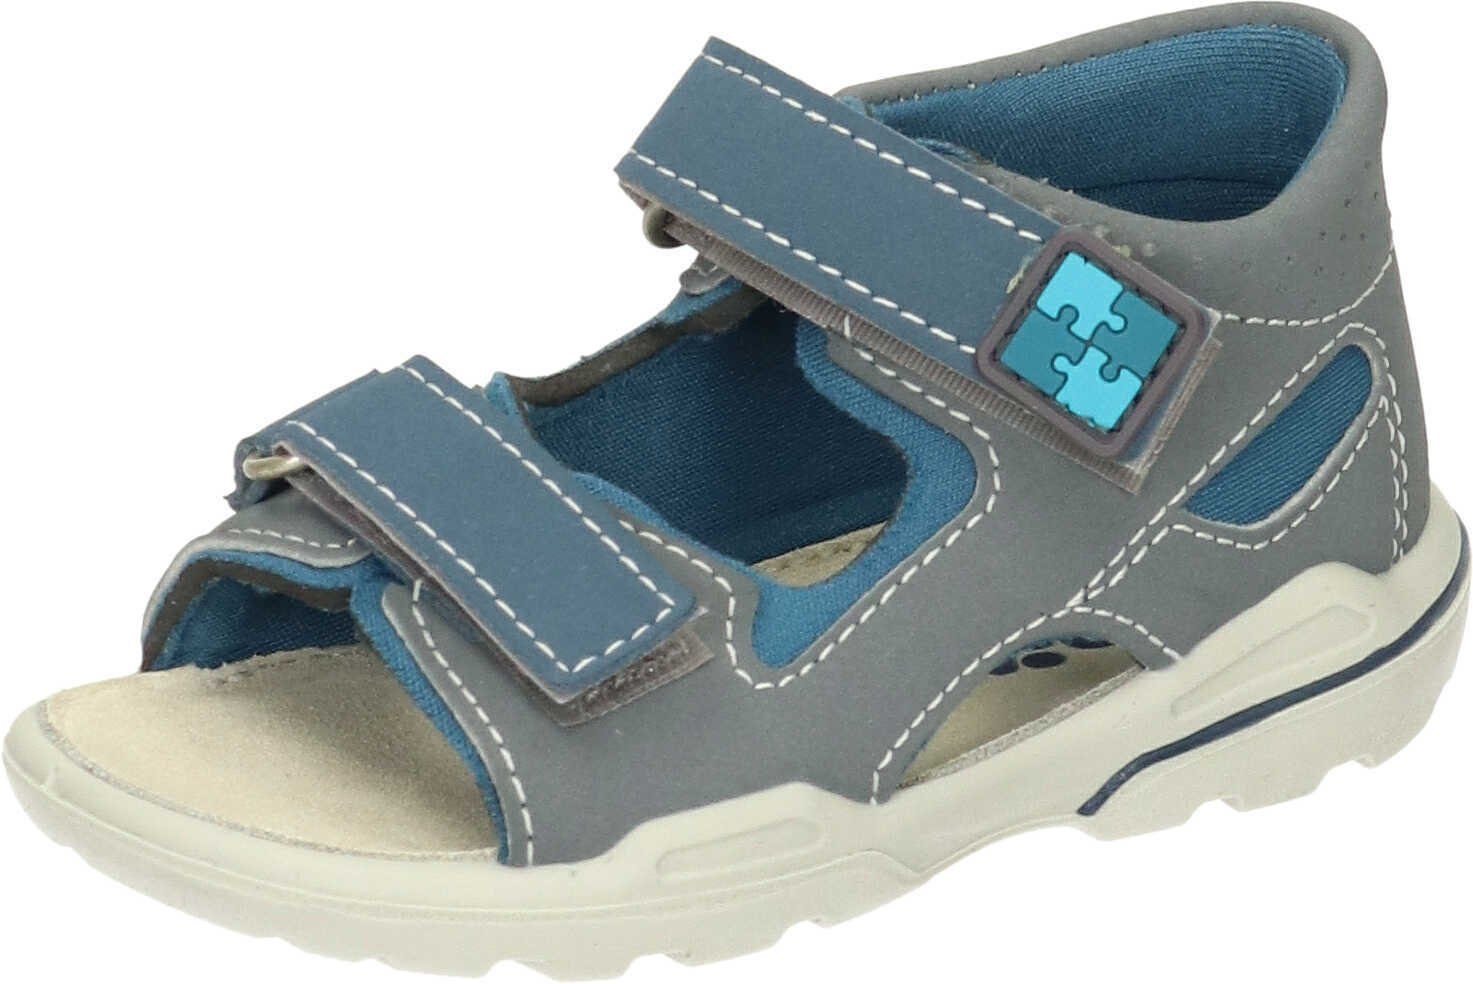 Sandaletten (450) Pepino aus graphit/petrol Textil Outdoorsandale